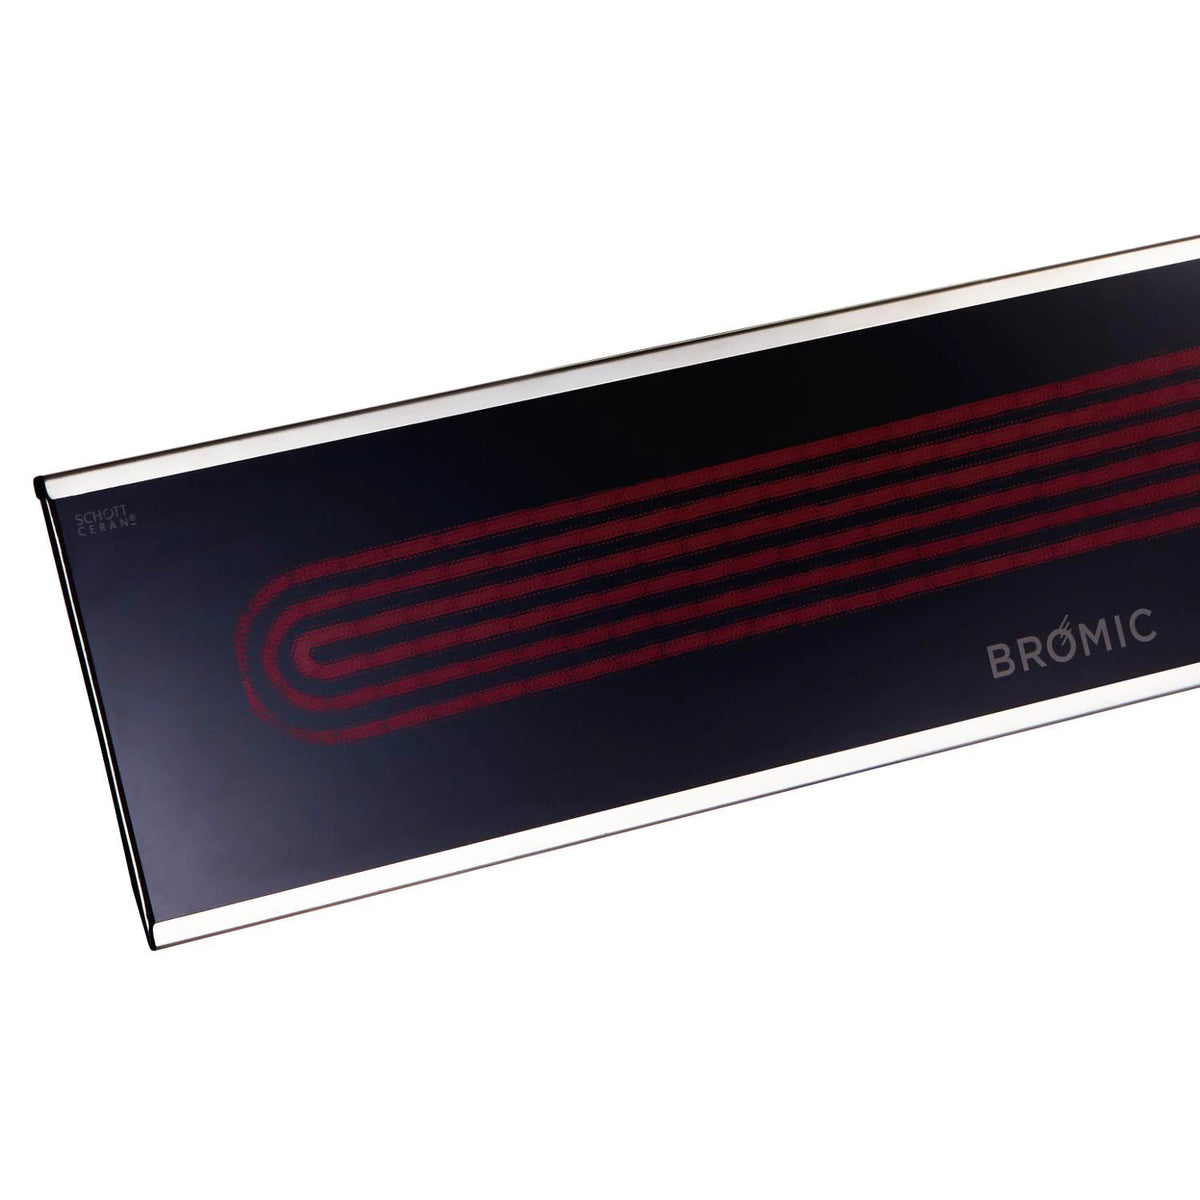 Bromic Platinum 2300W Smart-Heat Series II 240V Electric Patio Heater - Black